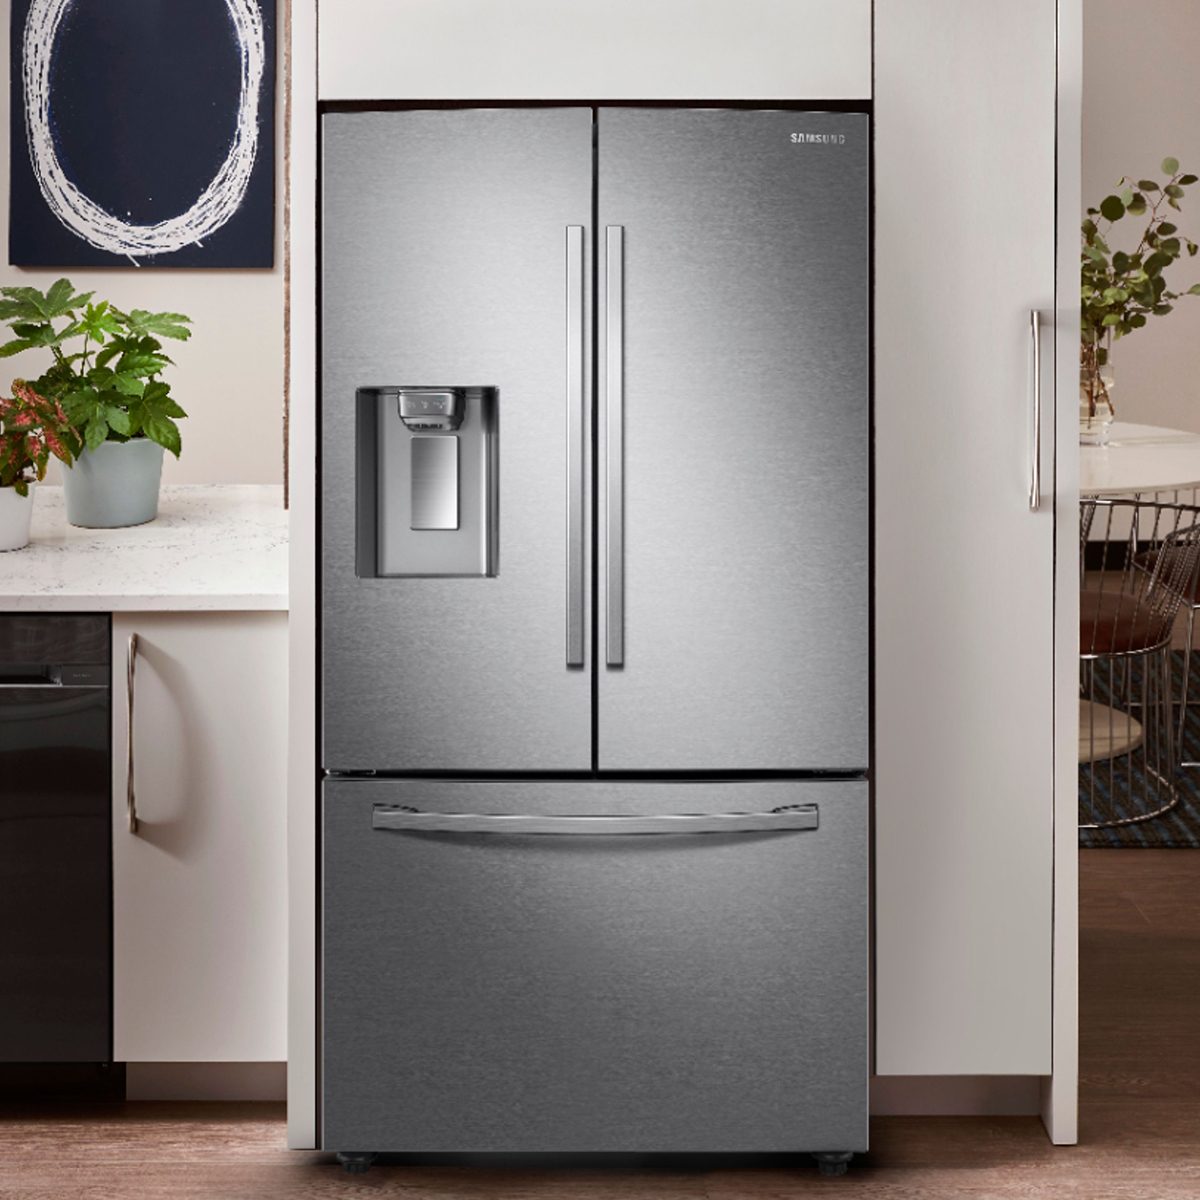 Samsung Stainless Steel French Door Refrigerator Via Bestbuy2